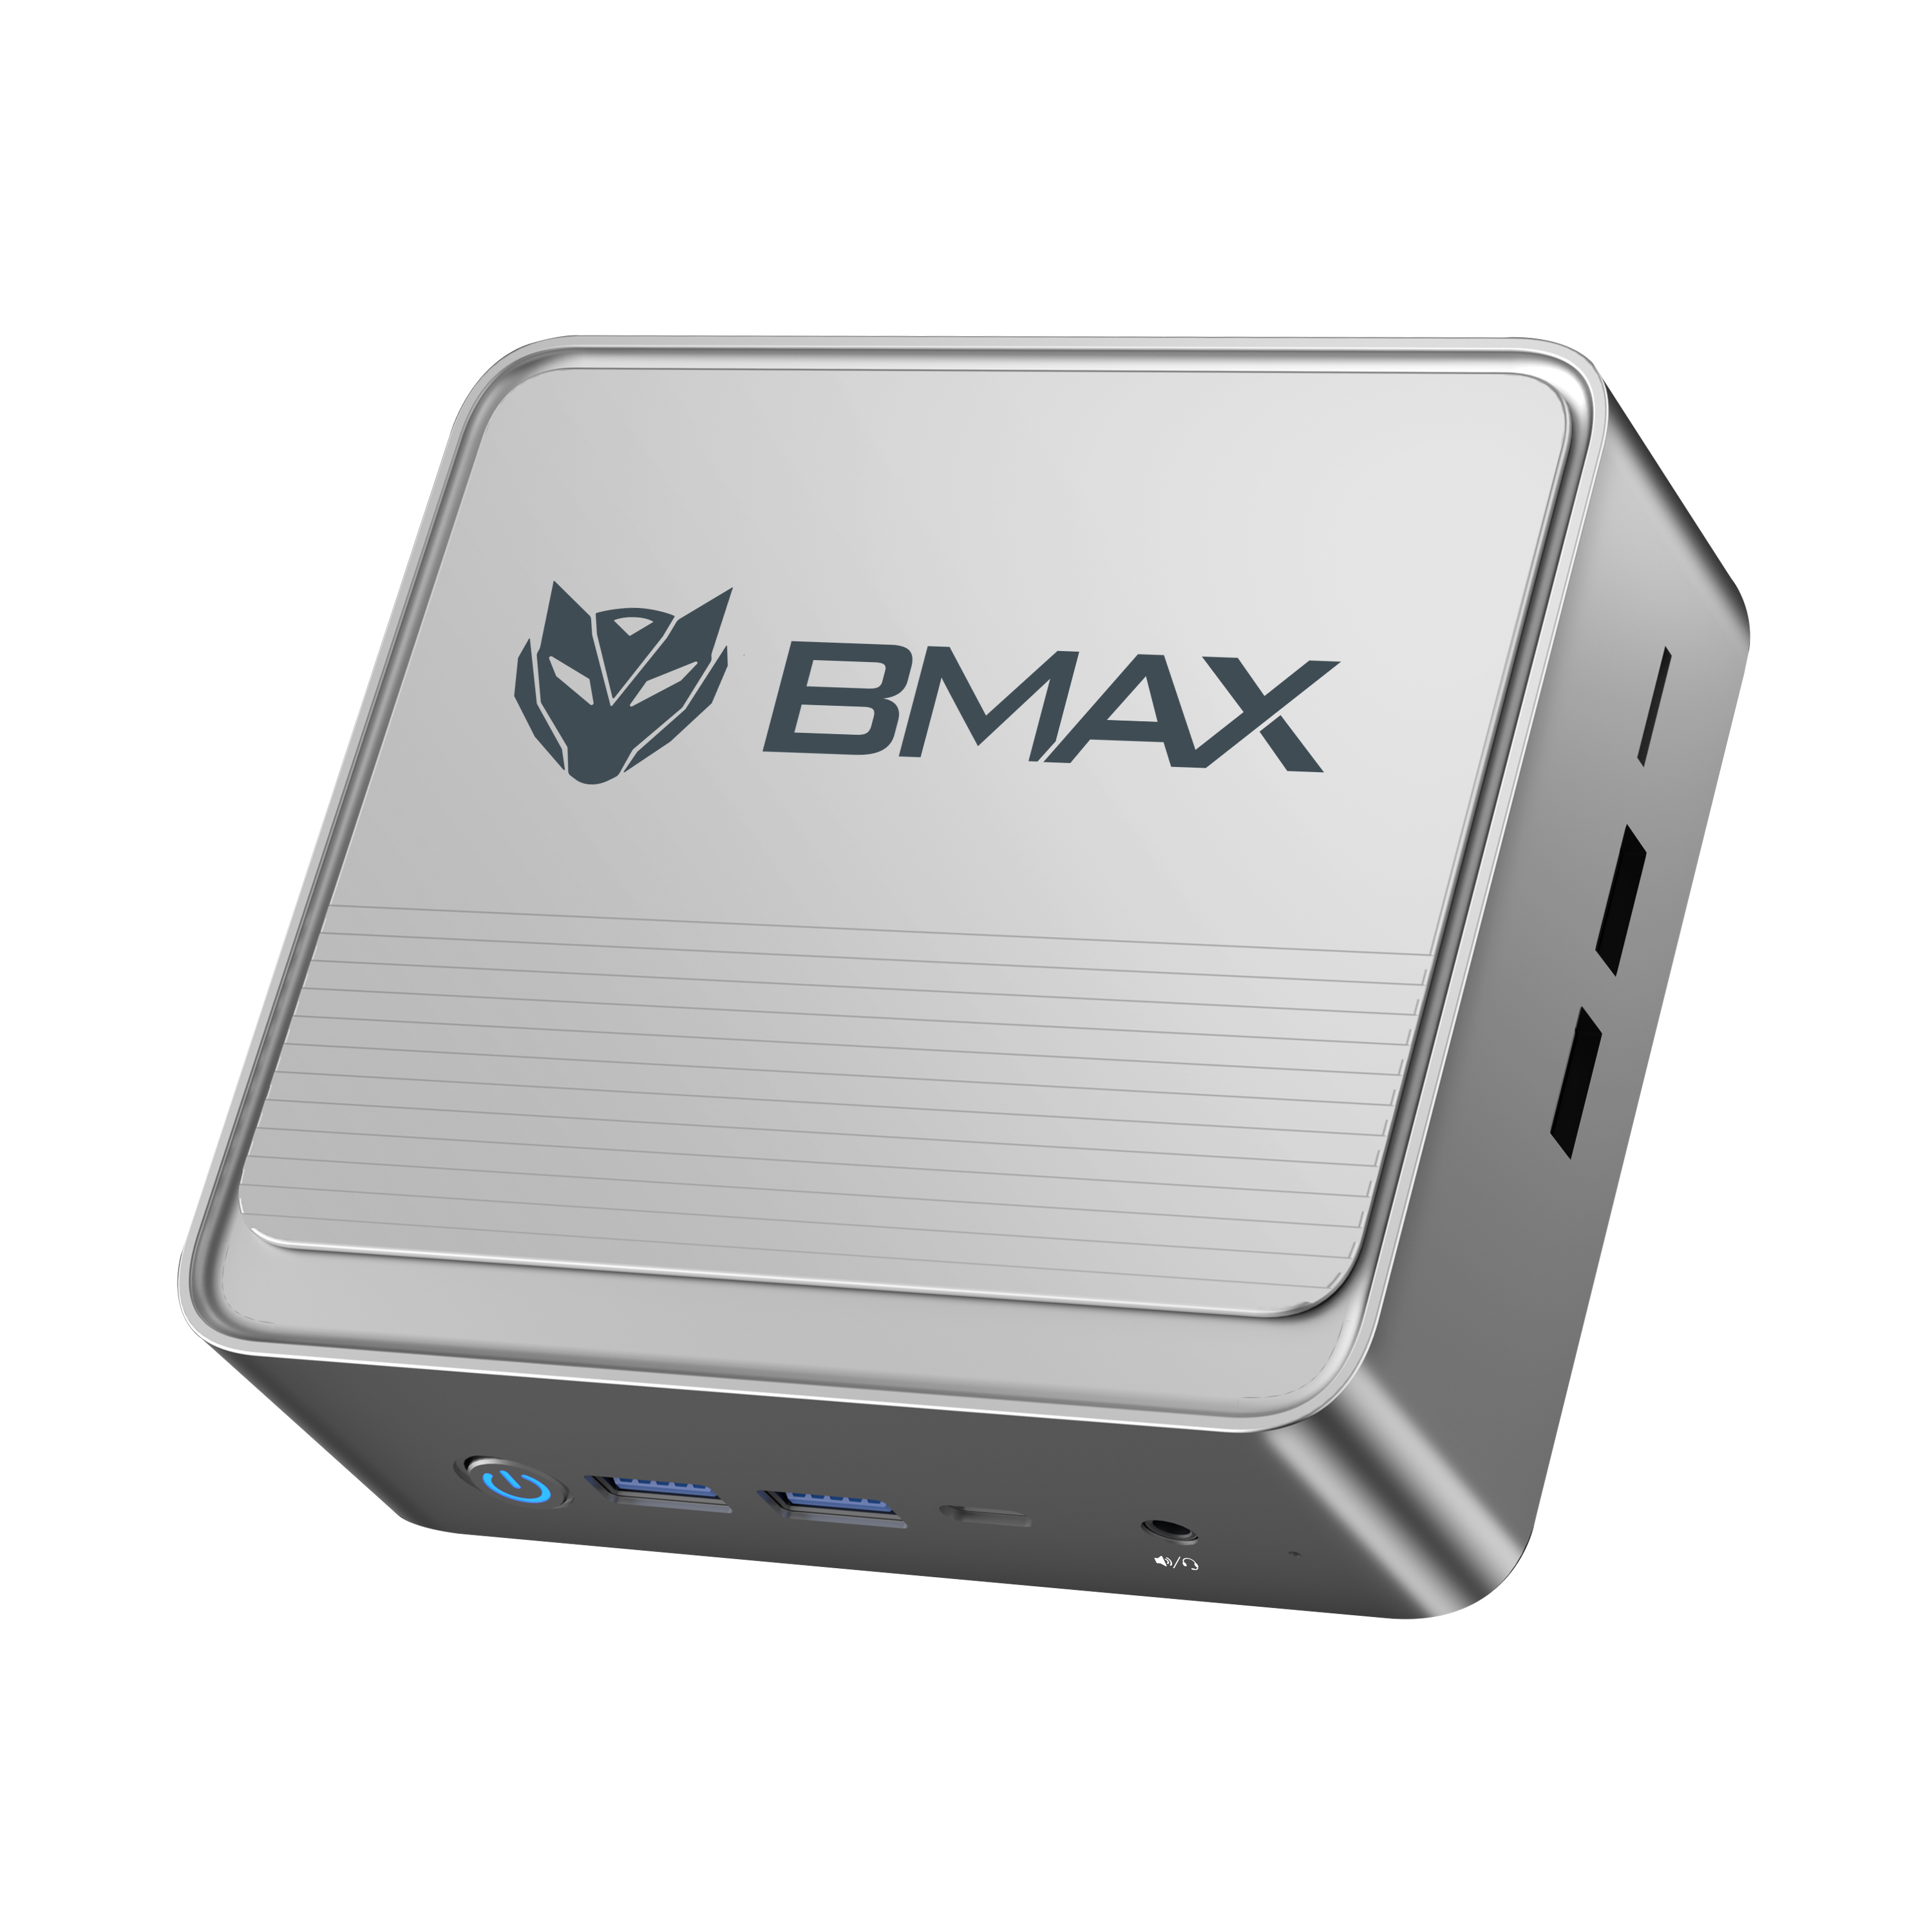 Maxmini B3 Plus (New) - Buy B3 Plus Product on BMAX